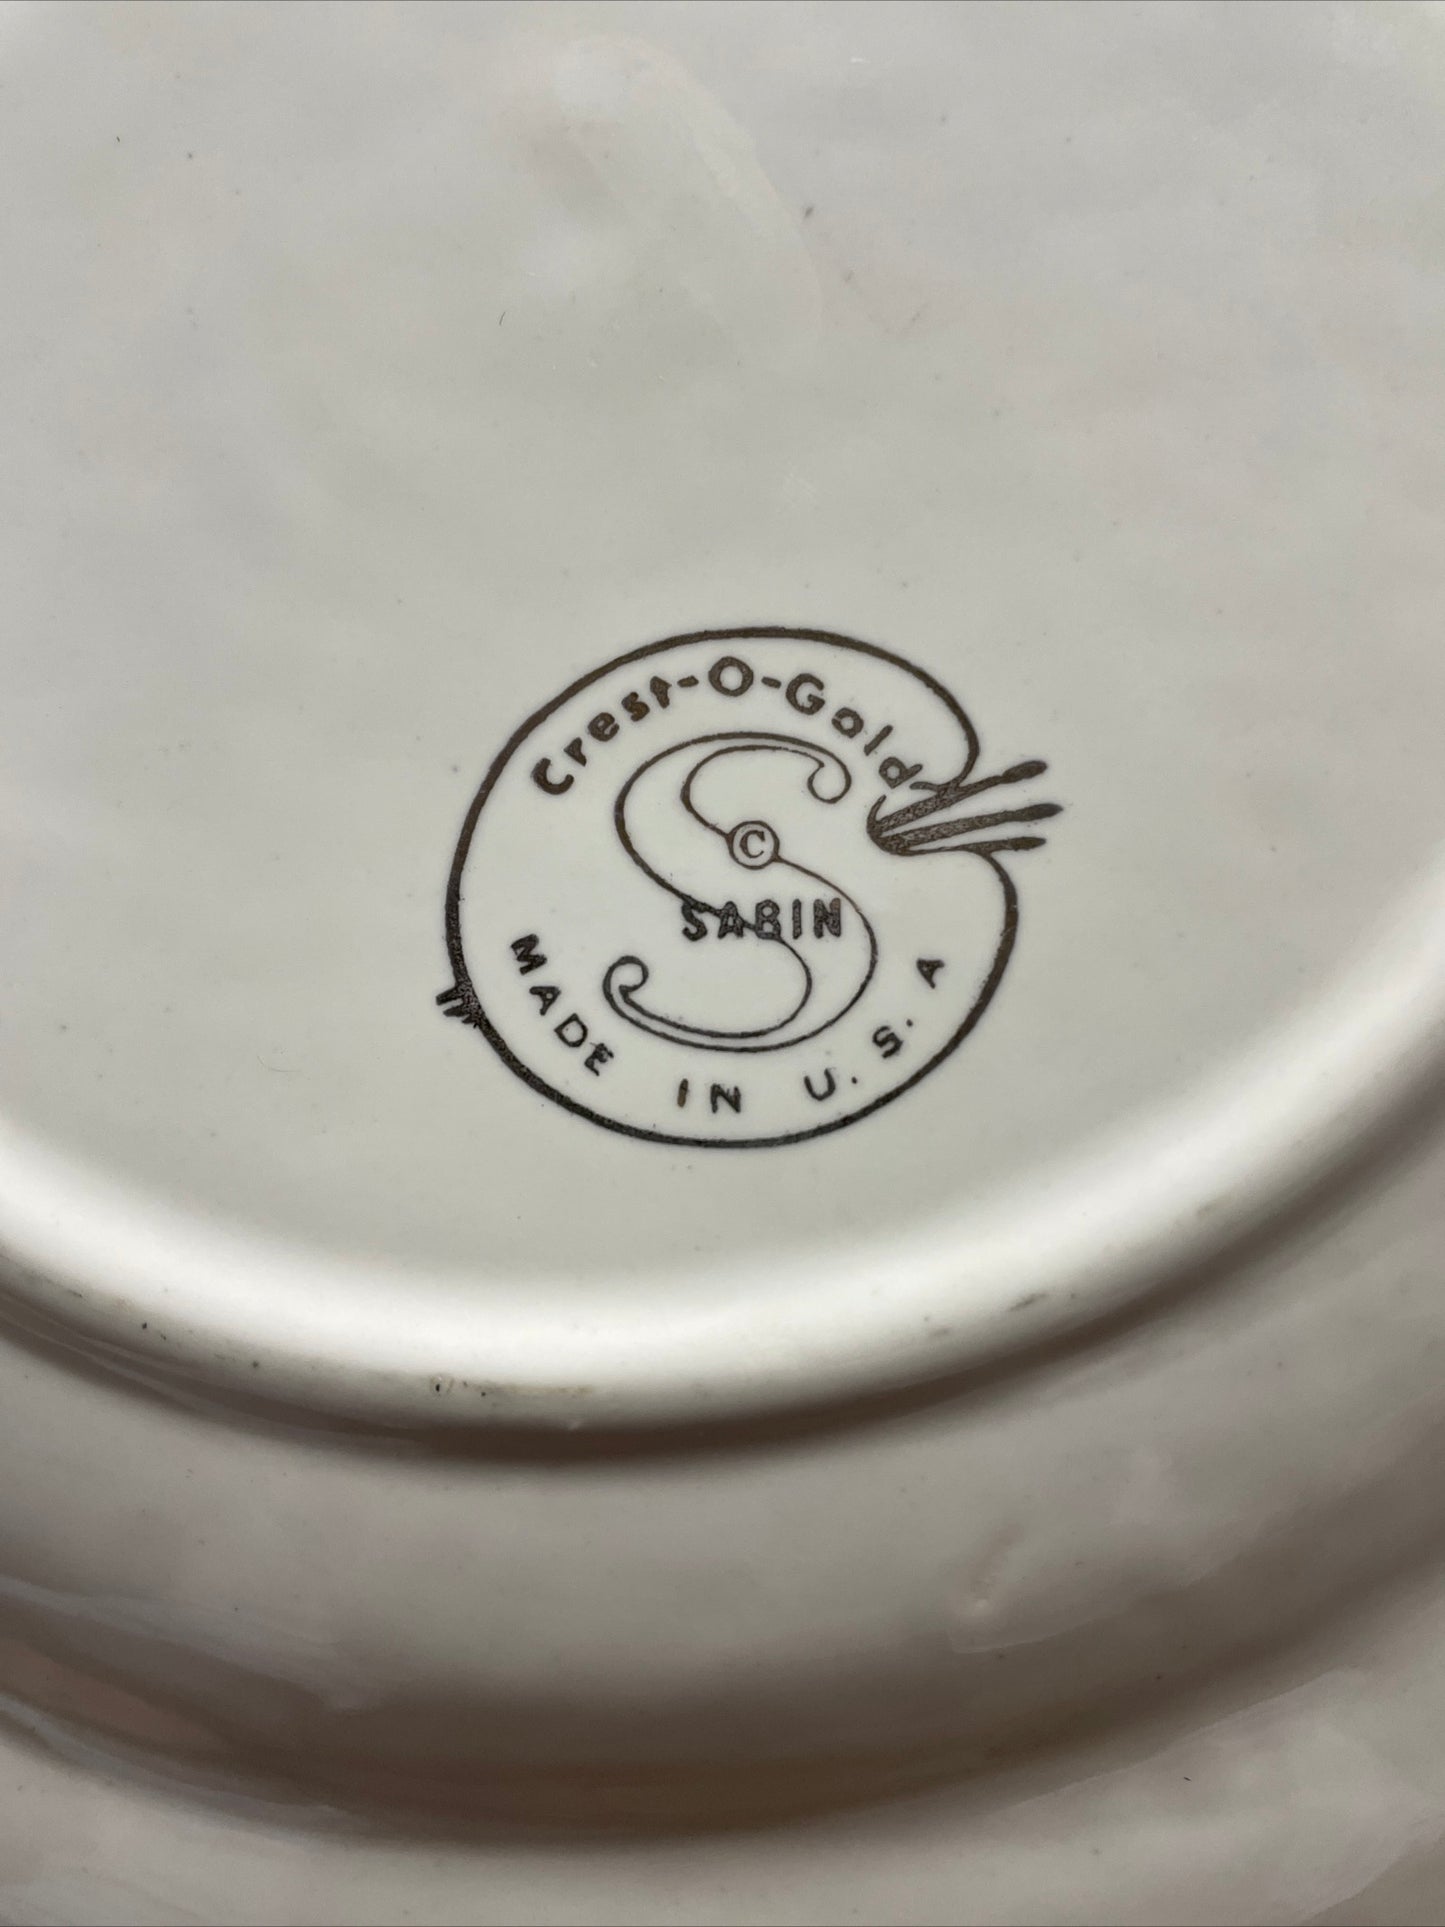 Rare 1940s Texas Collectors Plate